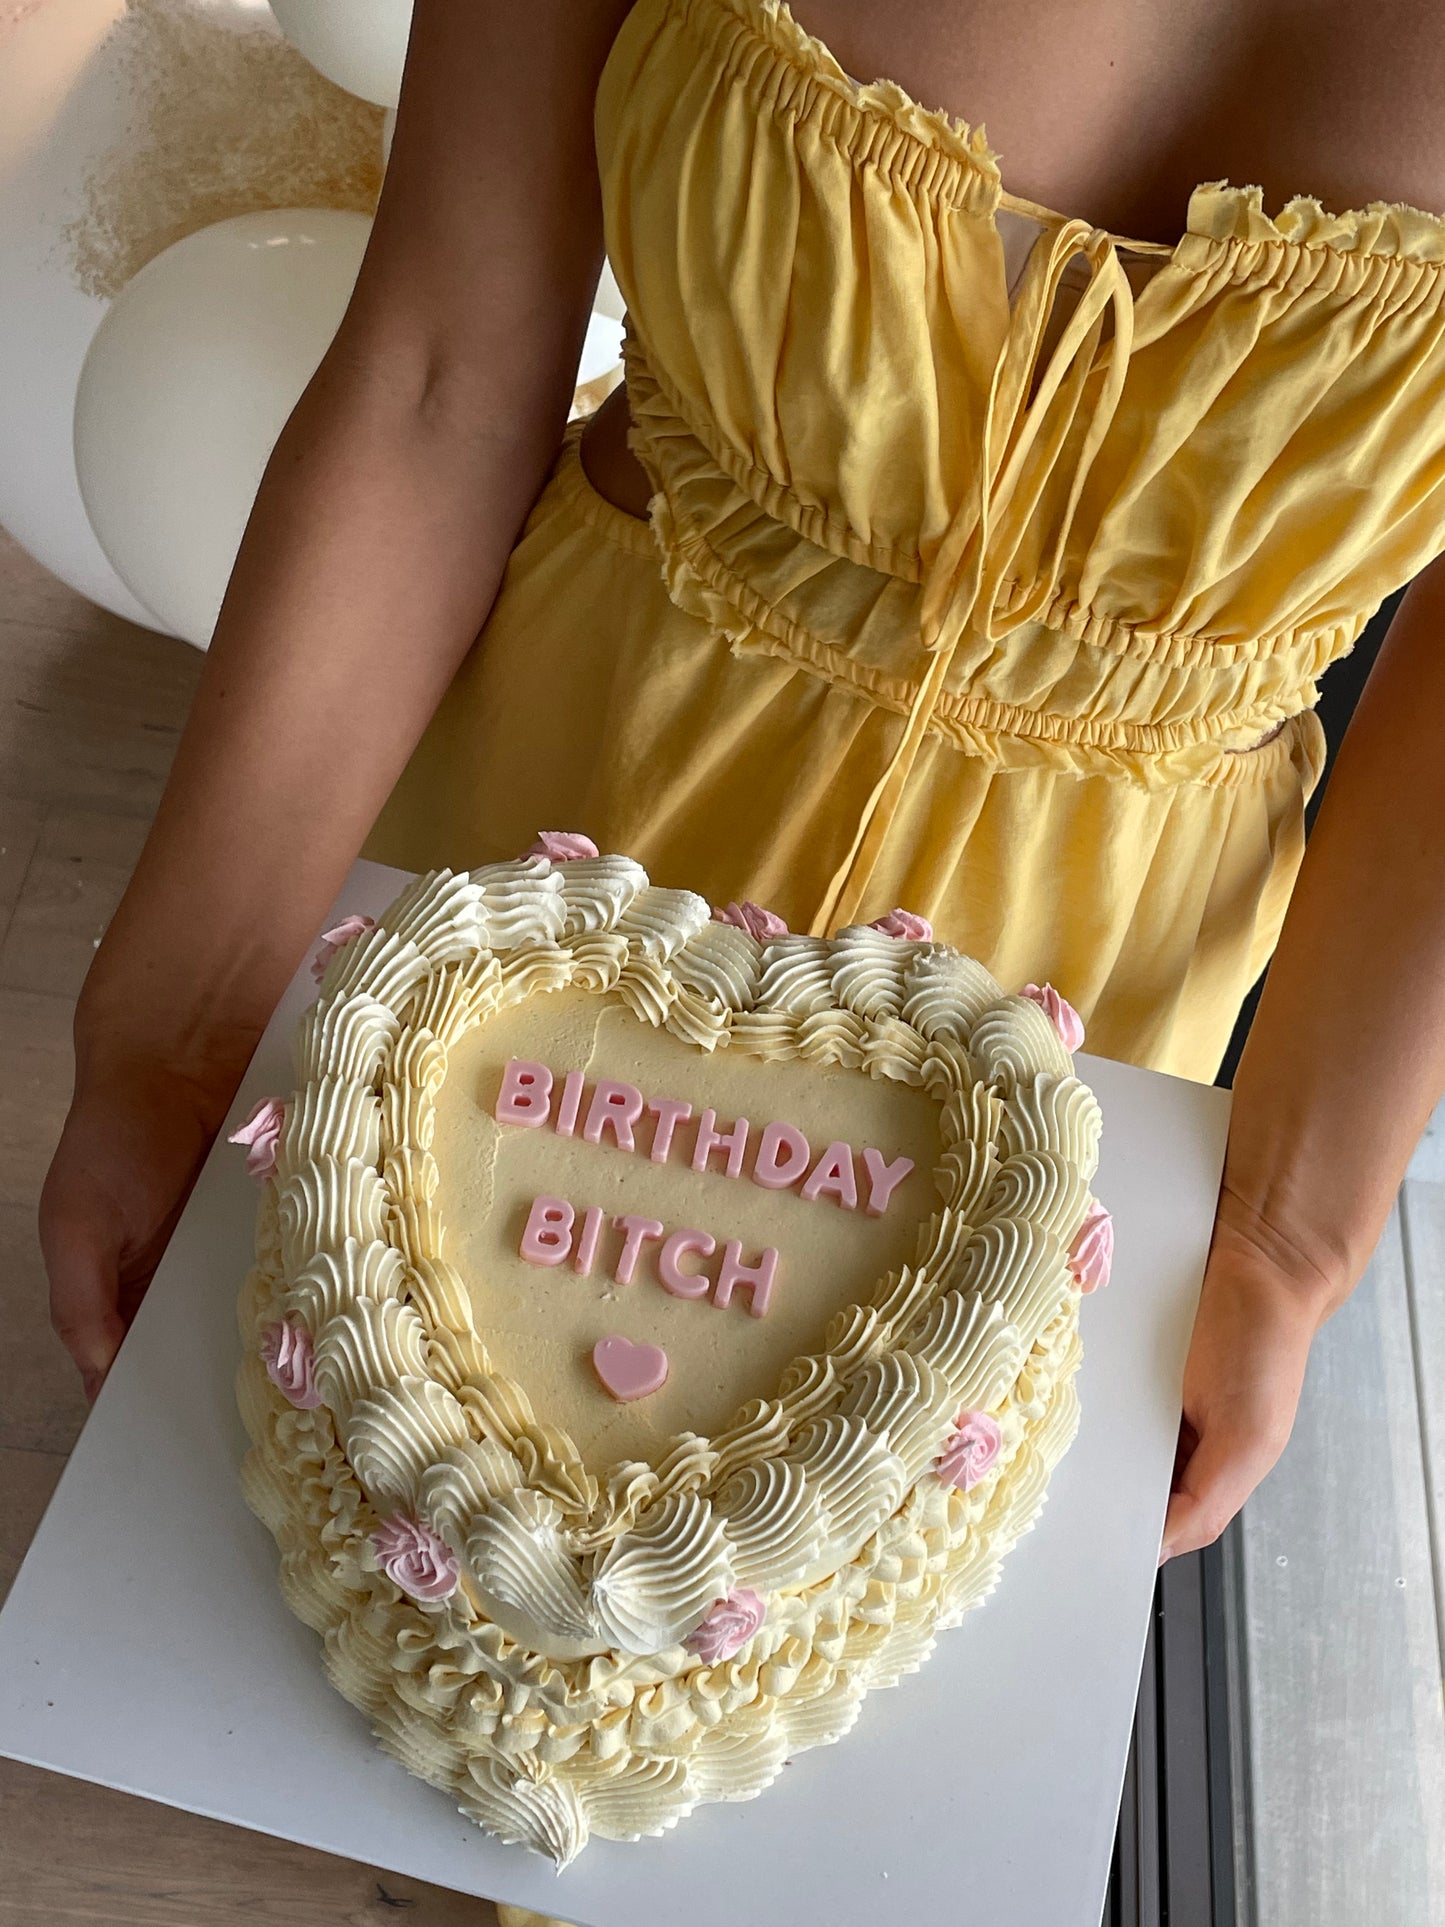 'The Toi' birthday b*tch cake